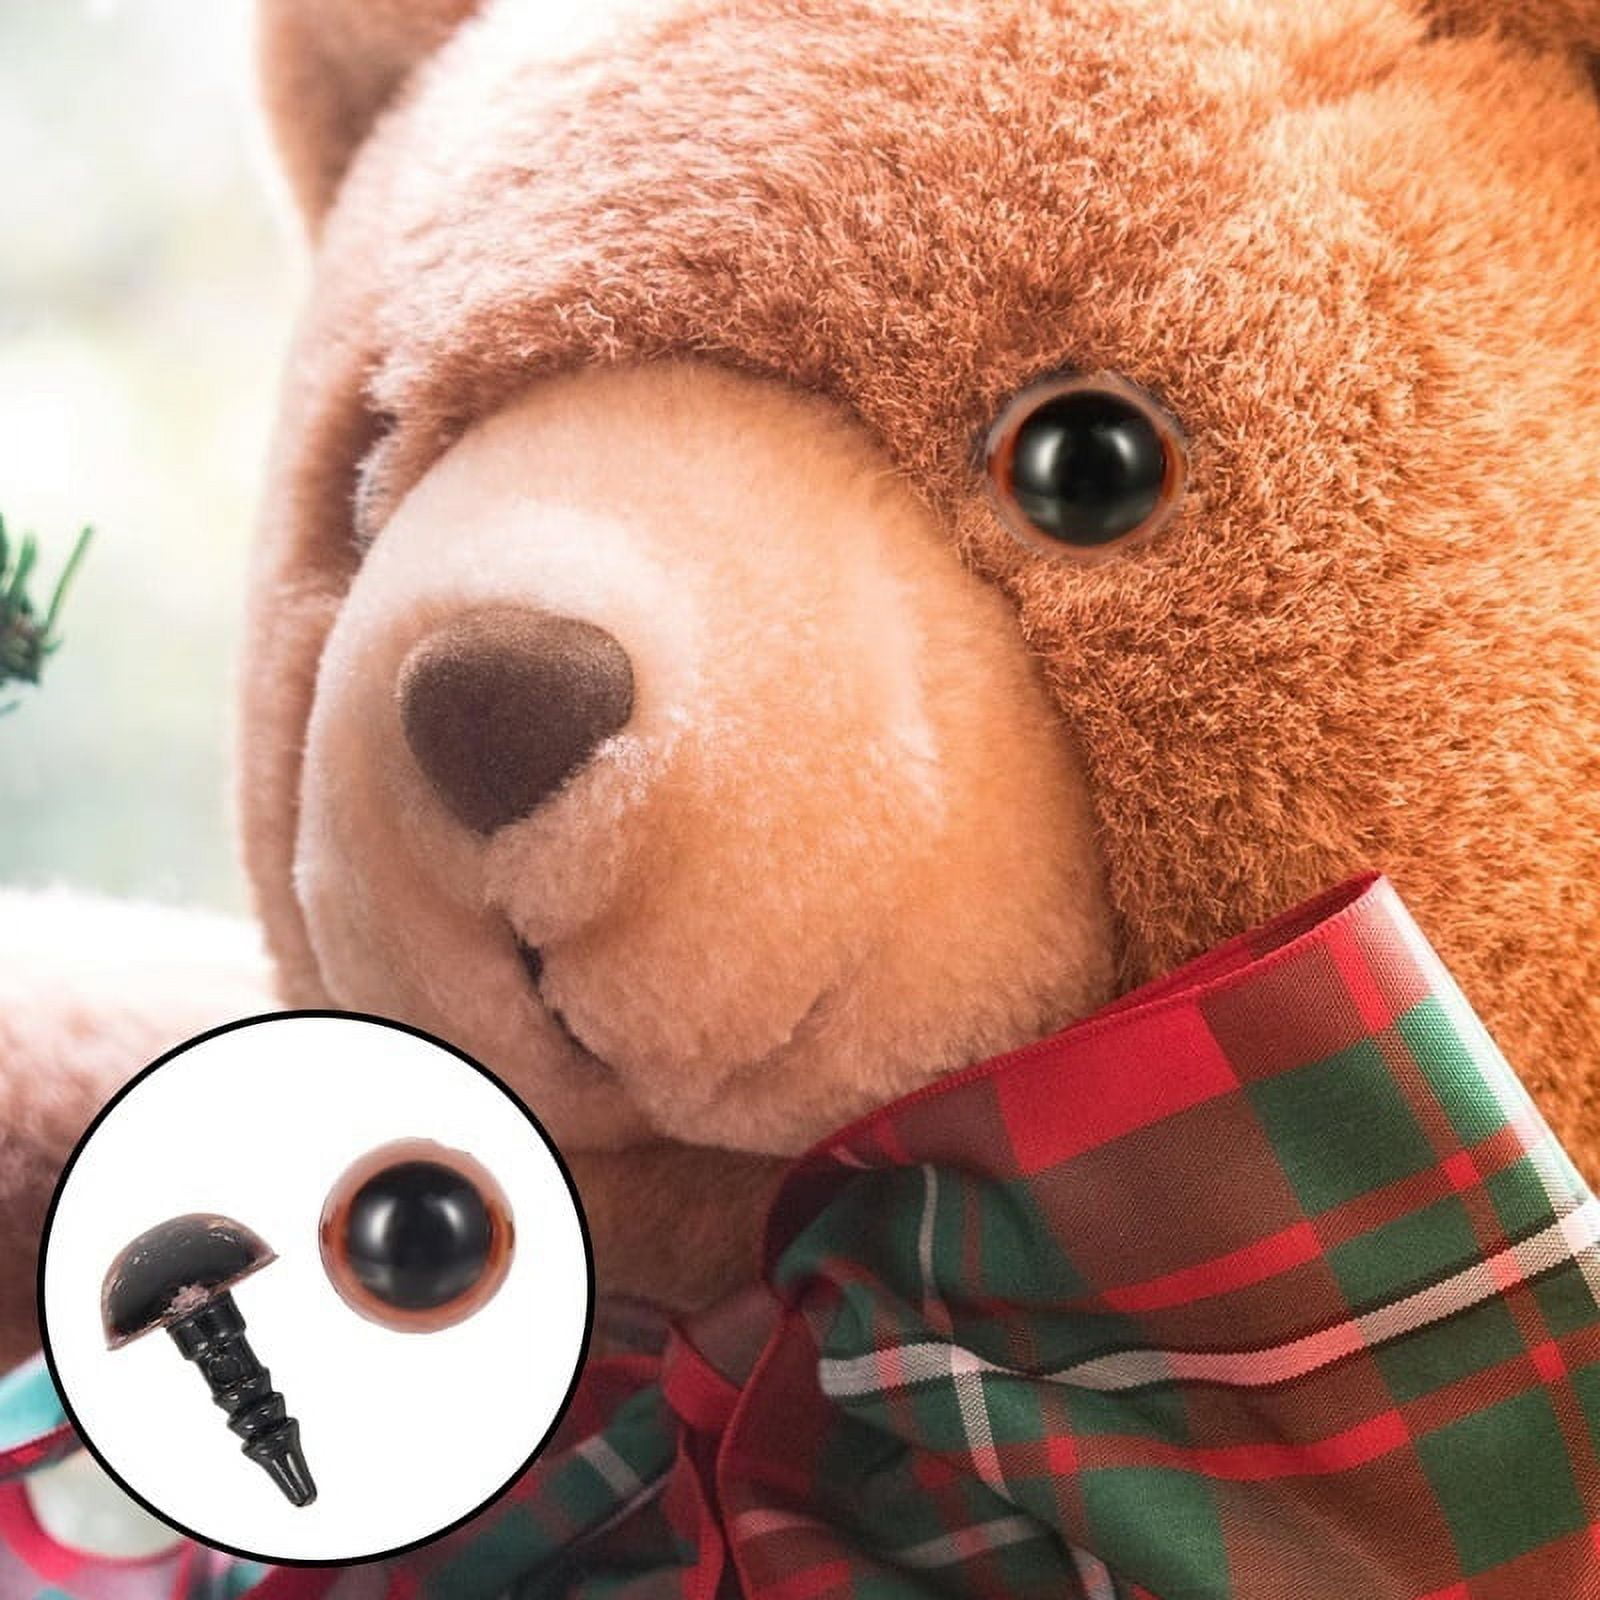 TEDDY BEAR EYES & NOSES – Bear Essence